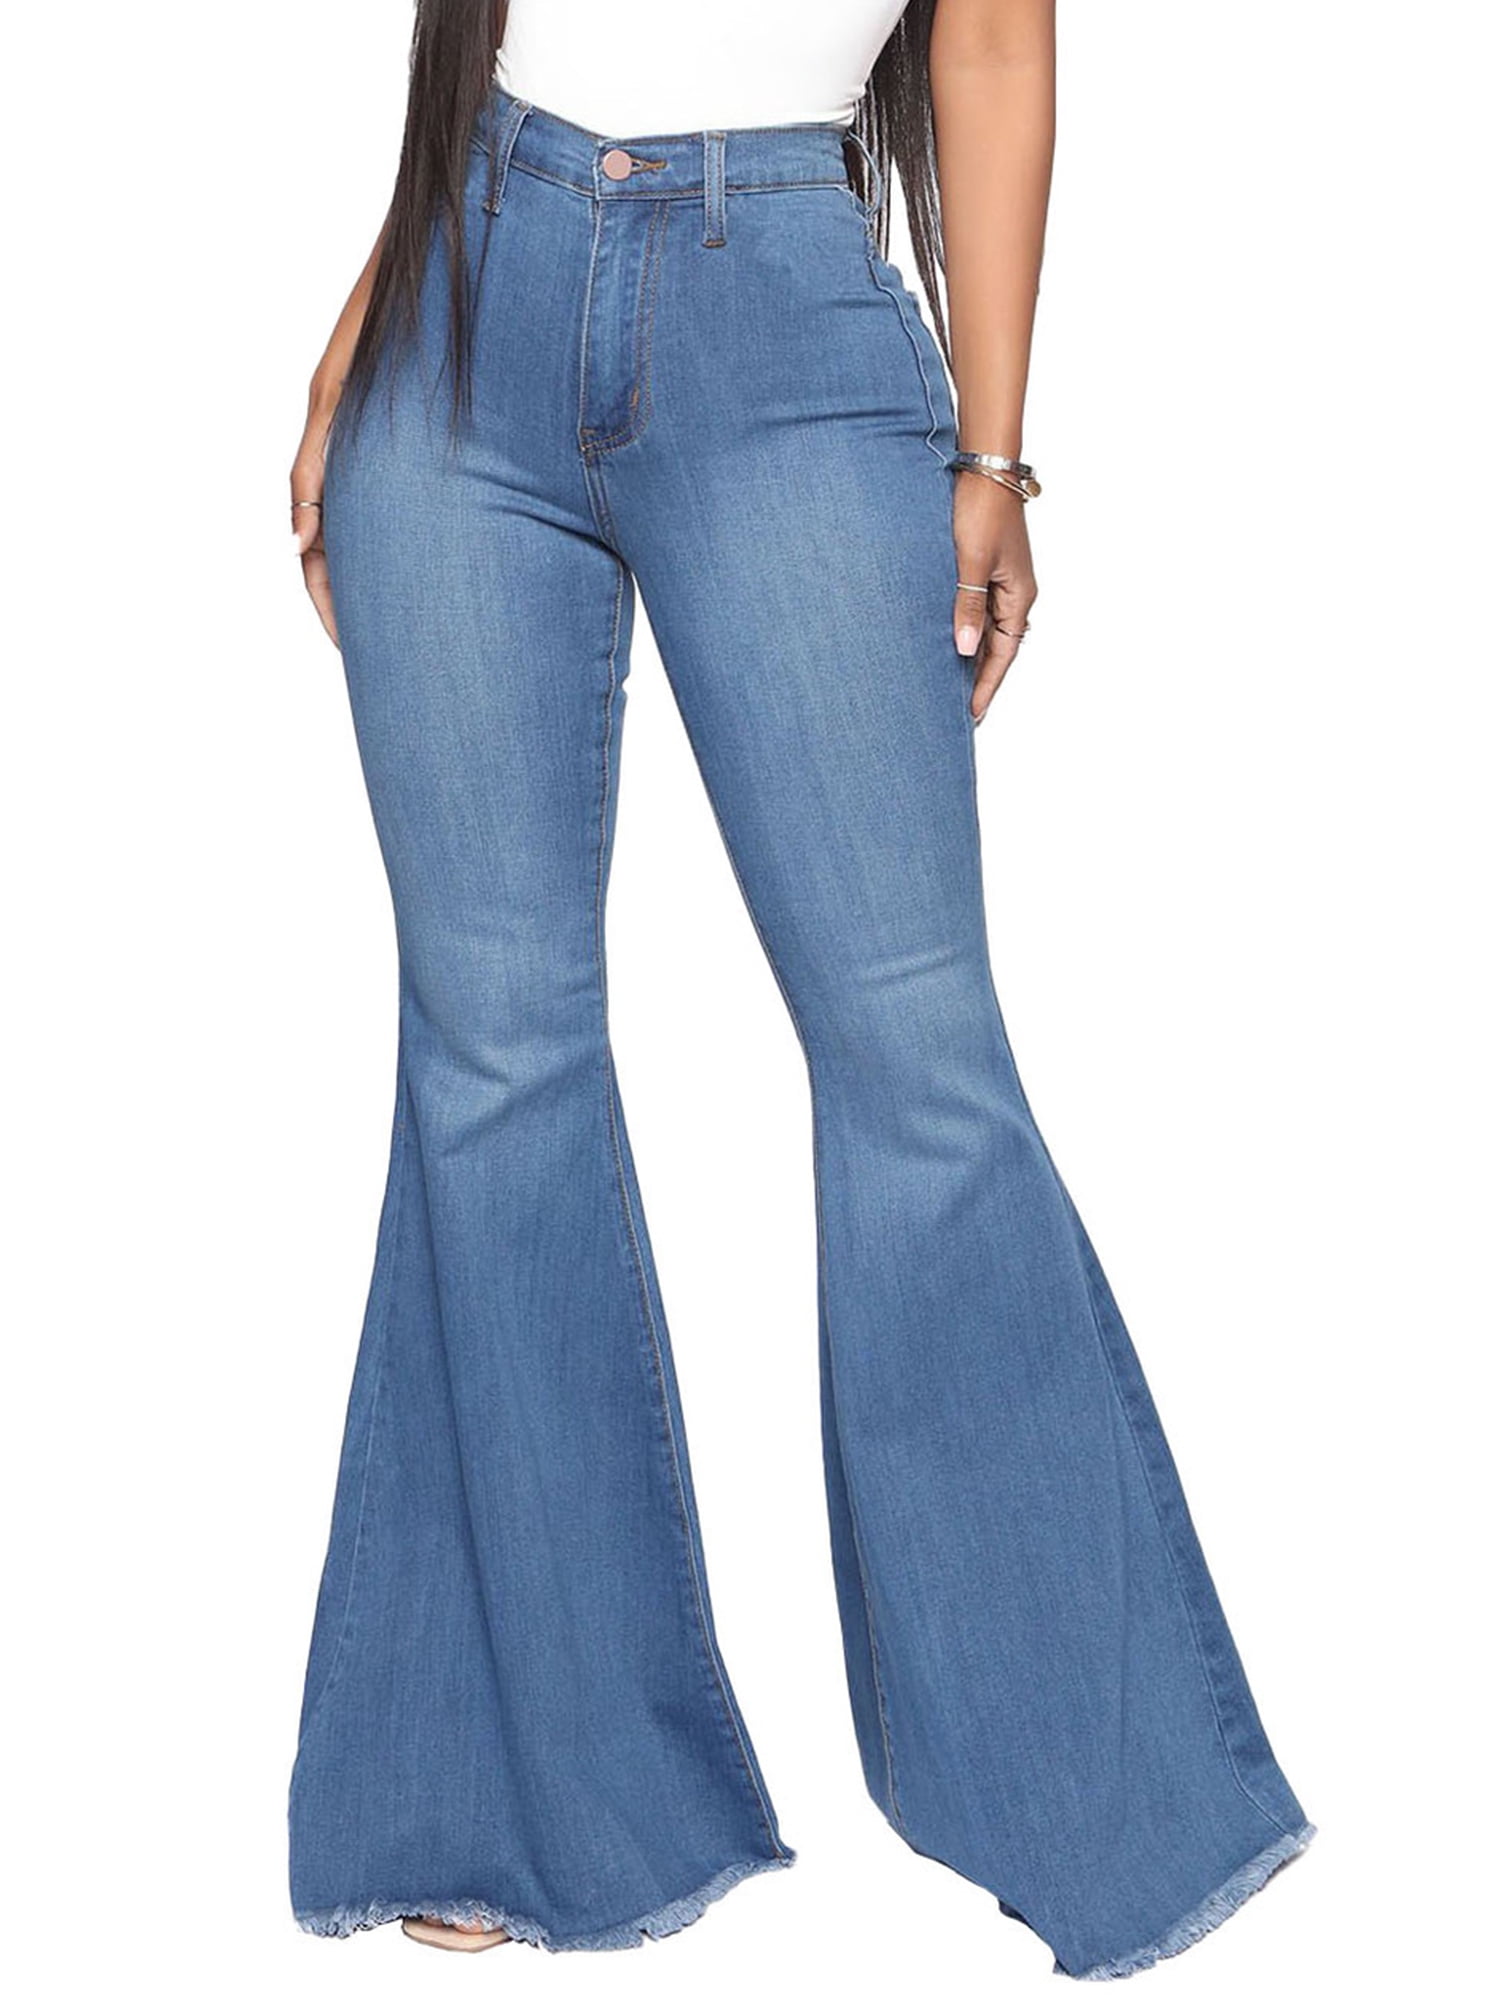 Frontwalk Denim Flare Pants for Women High Waist Stretchy Jeans Bell  Bottoms 